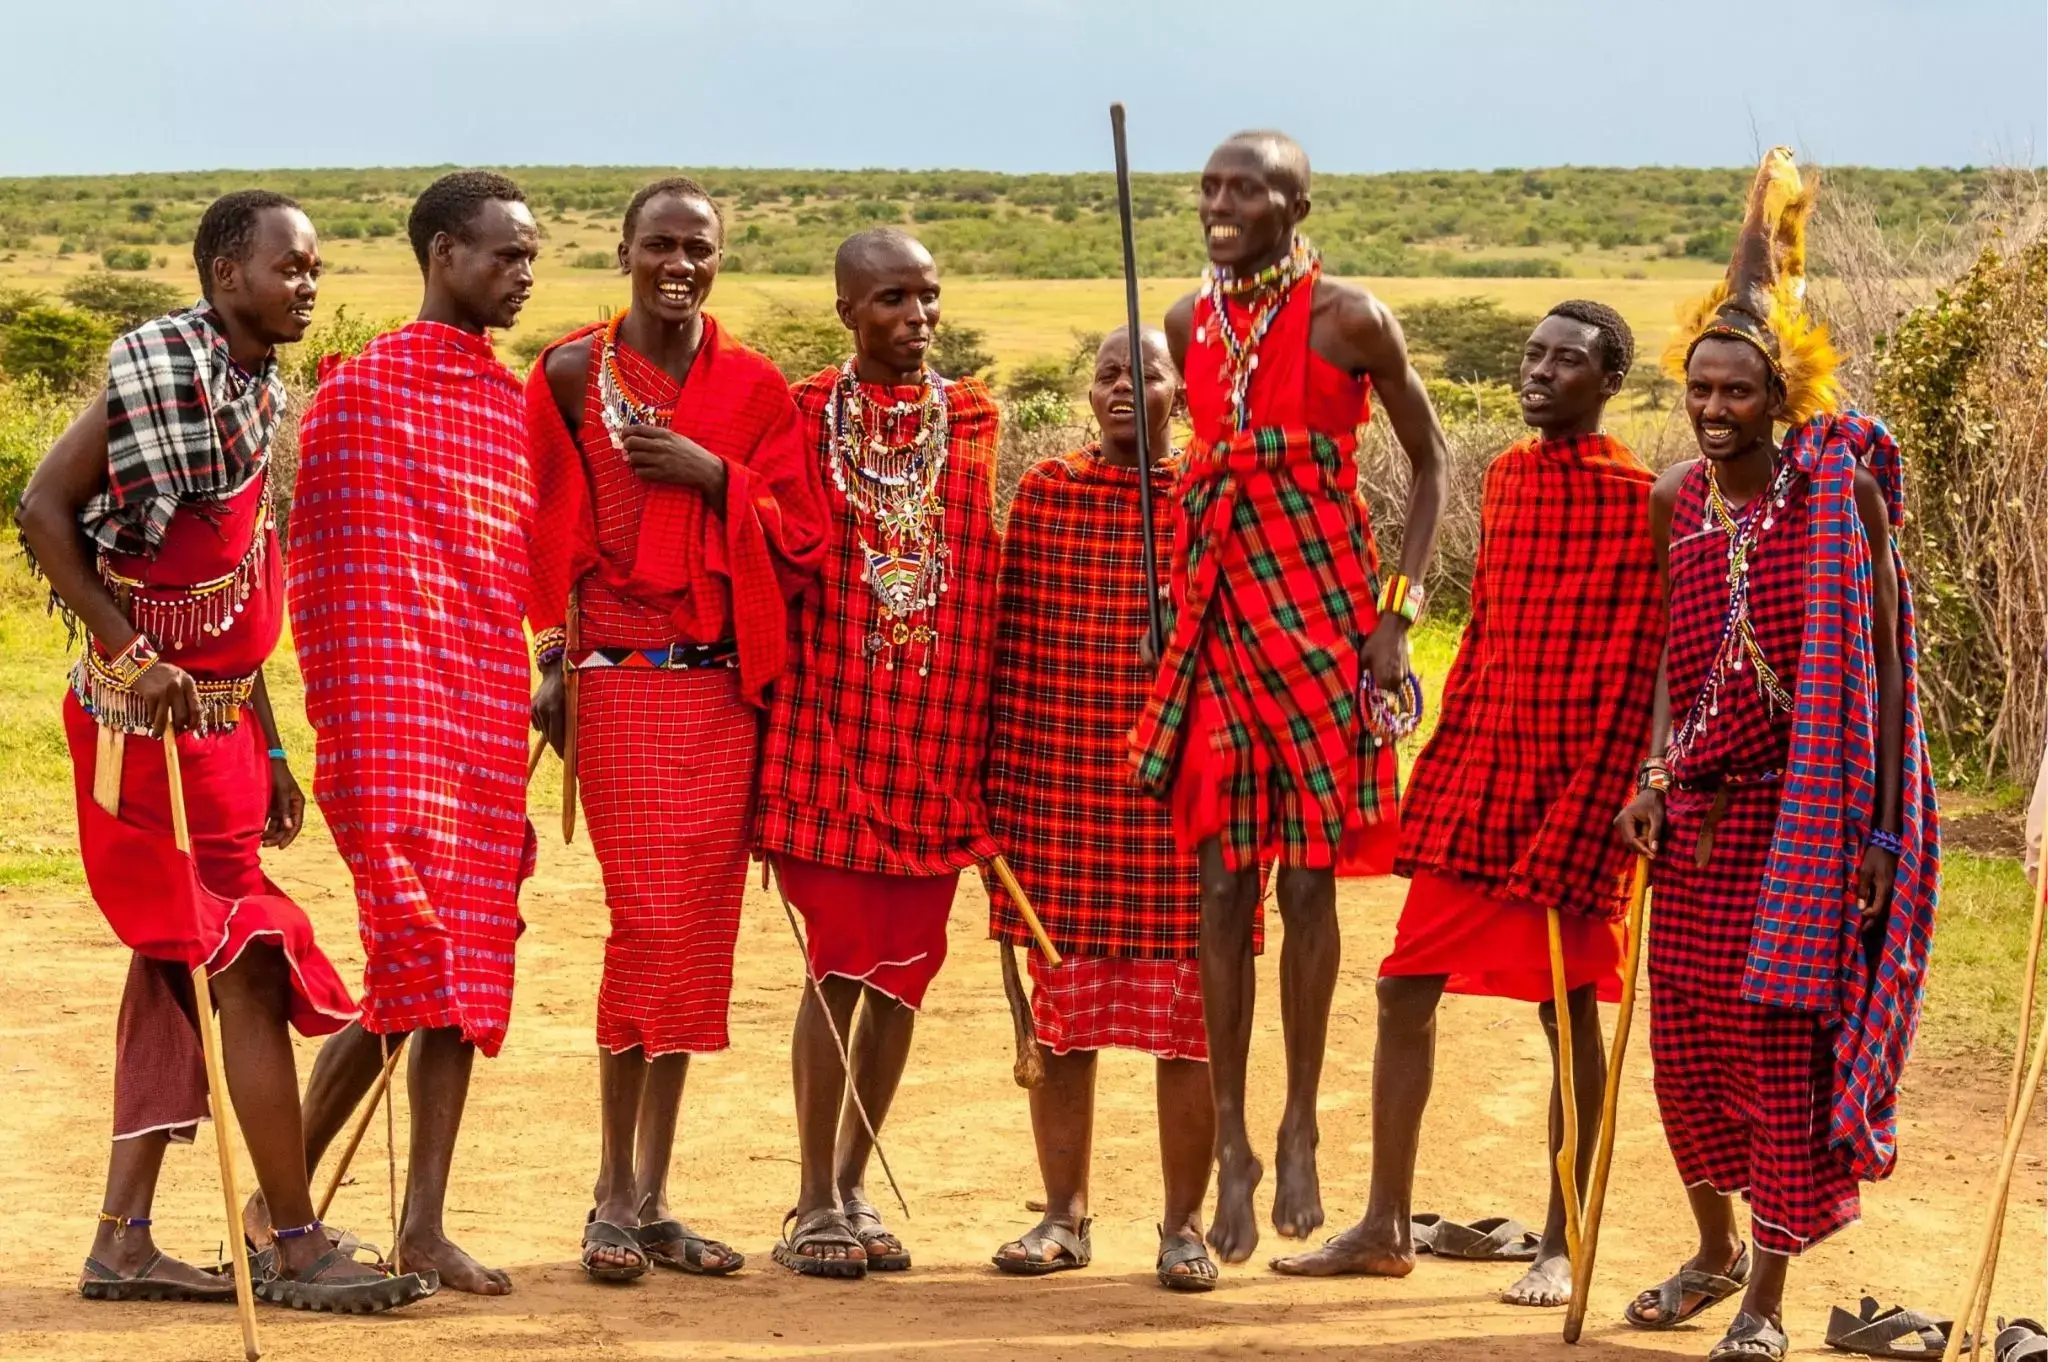 The tribe of Maasai